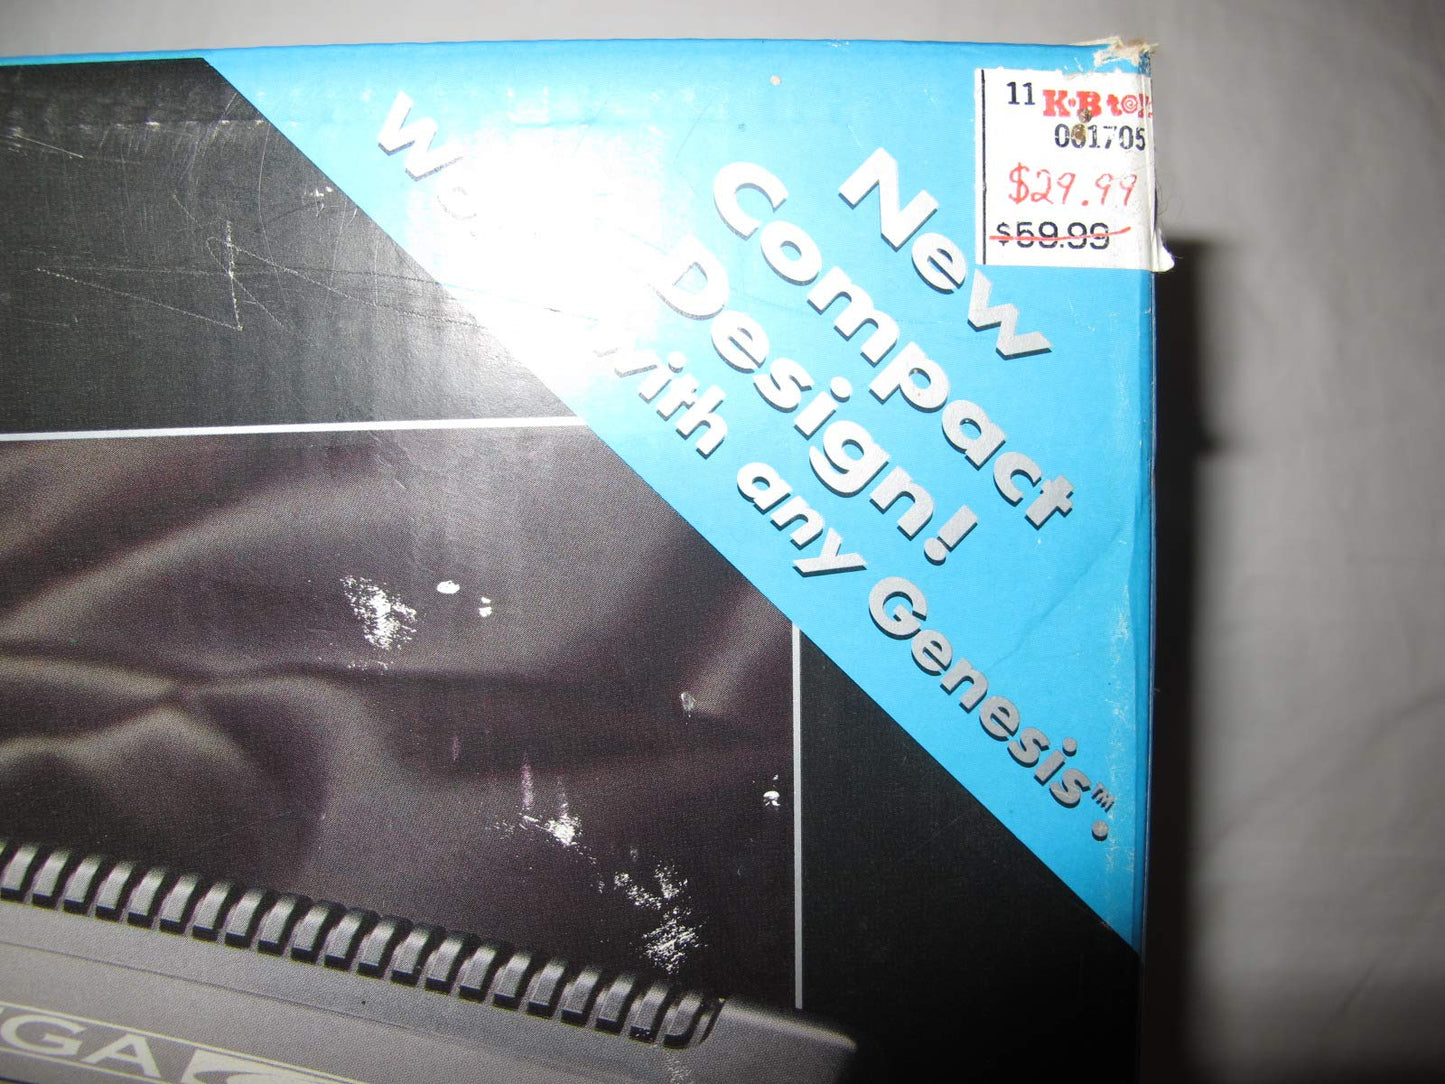 Sega CD Model 2 - Video Game Console